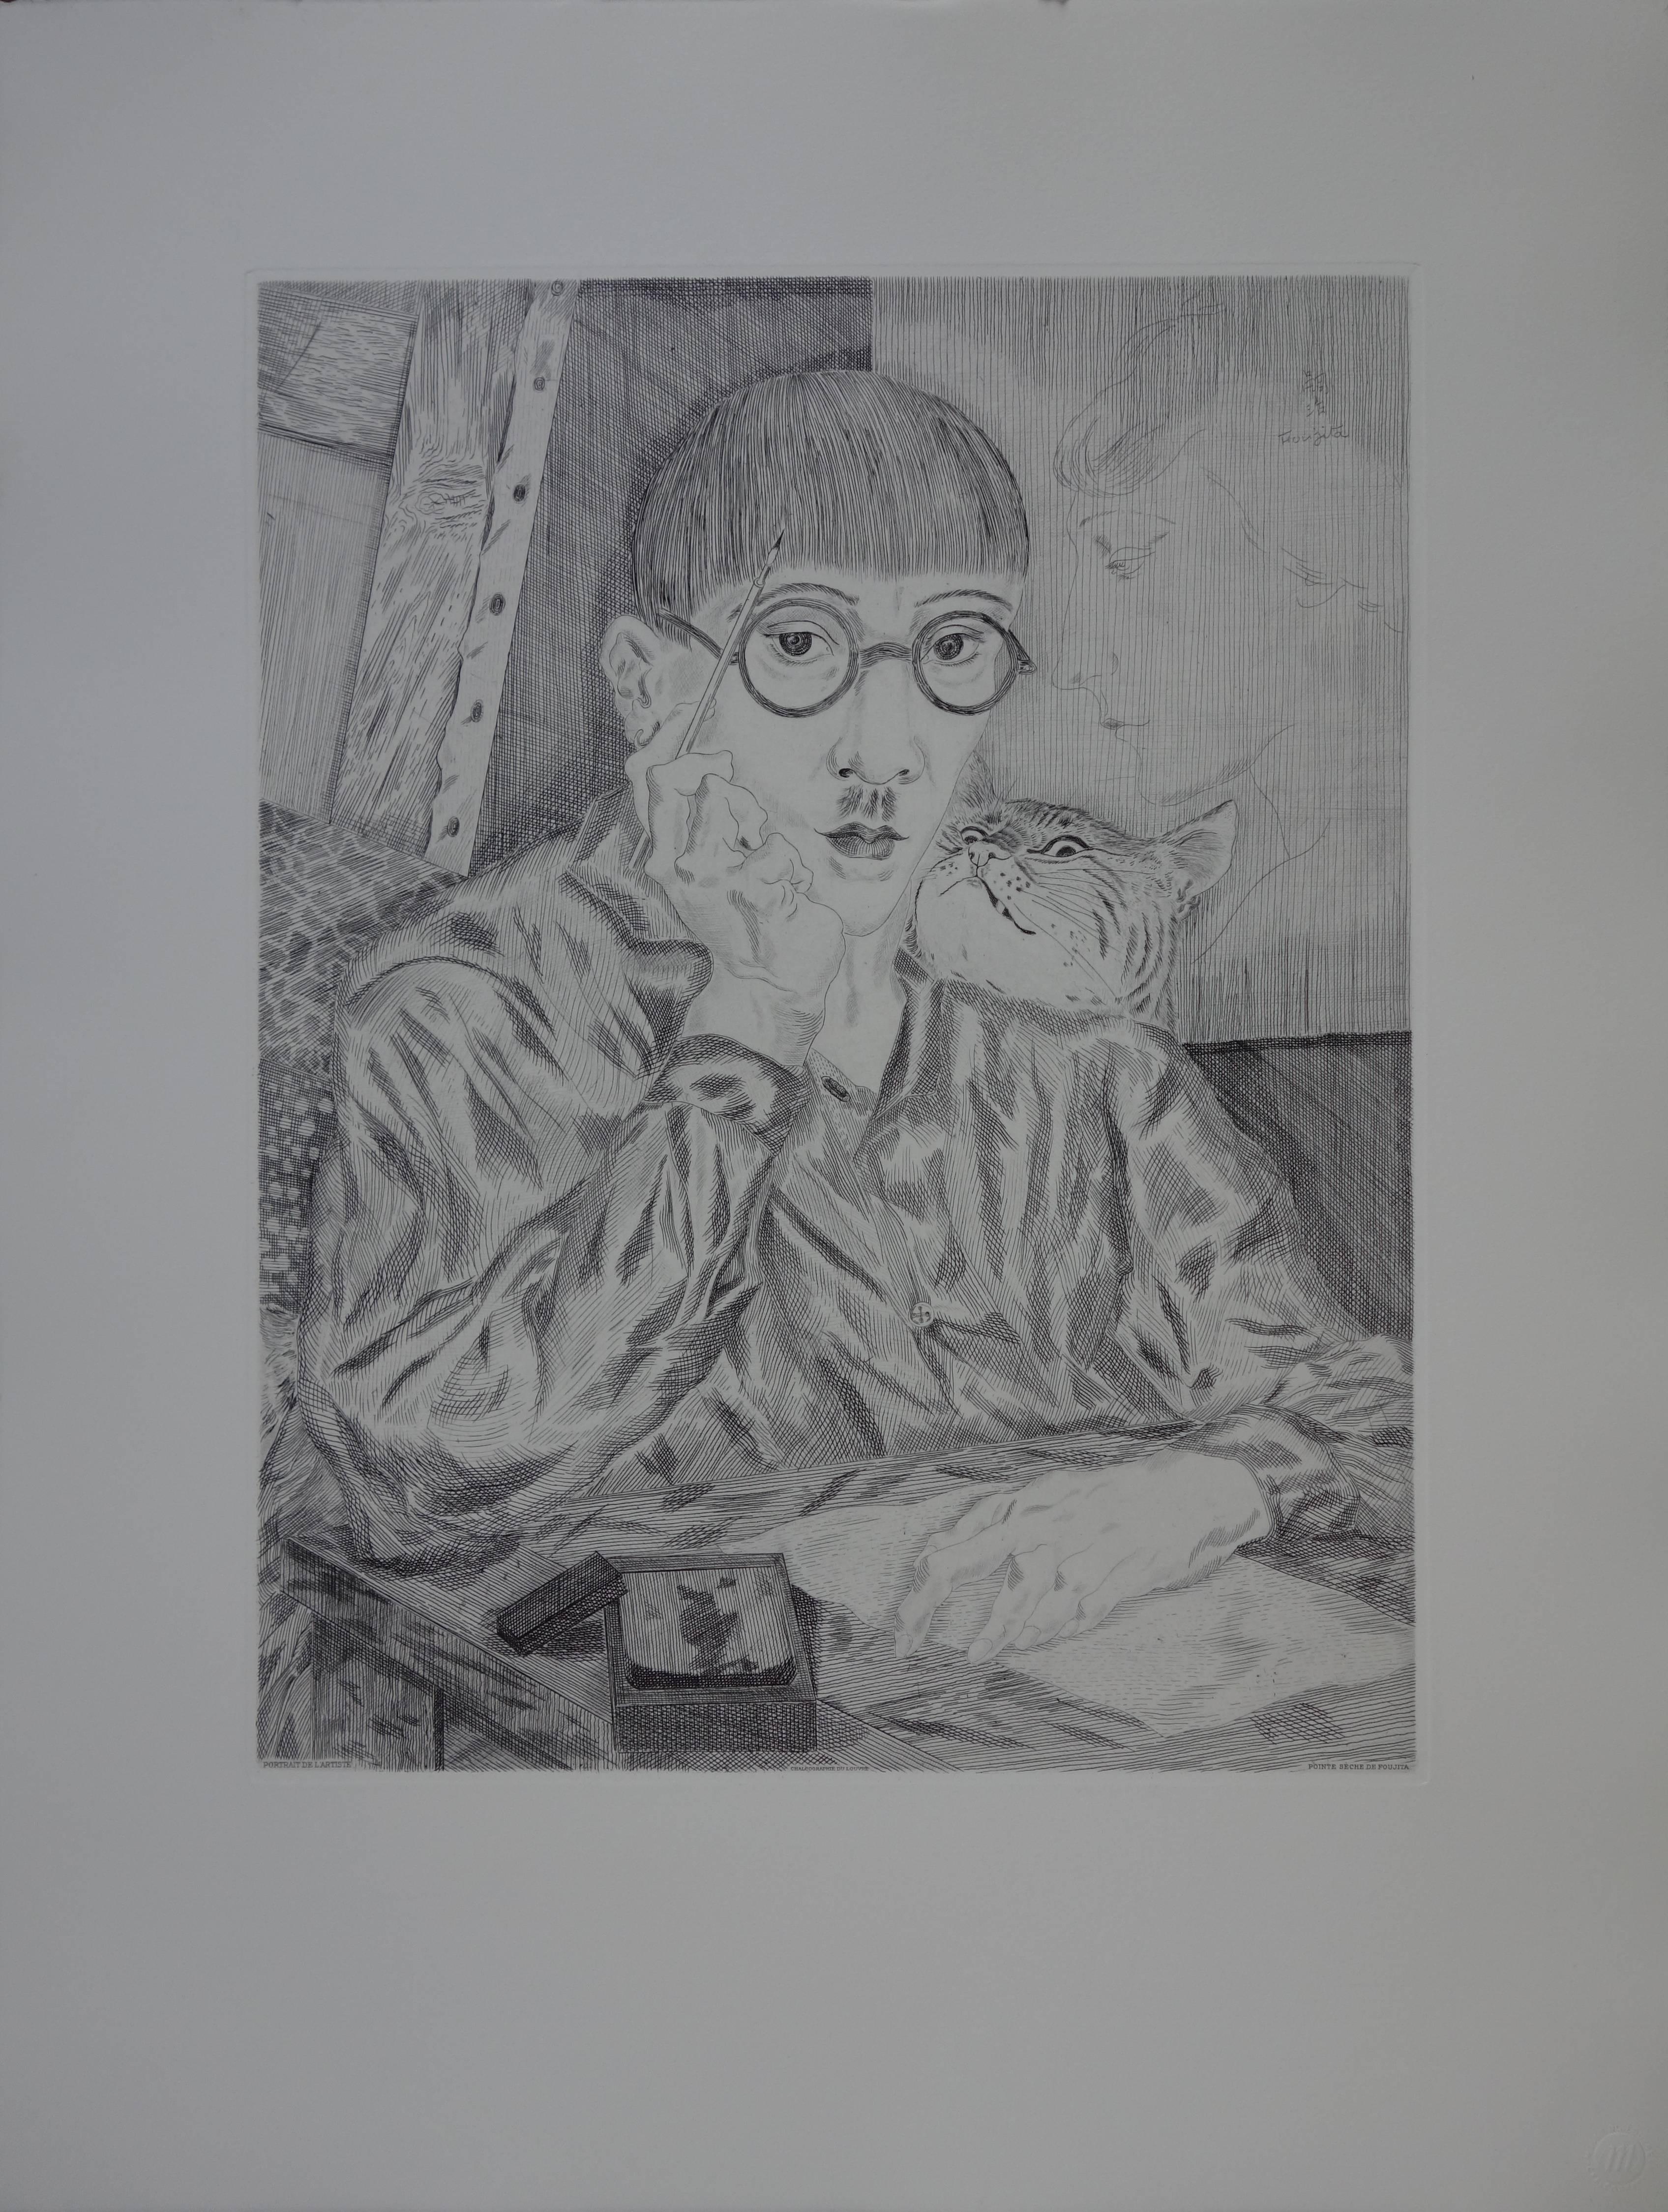 Leonard Tsuguharu Foujita Portrait Print - Self Portrait With a Cat - Original etching